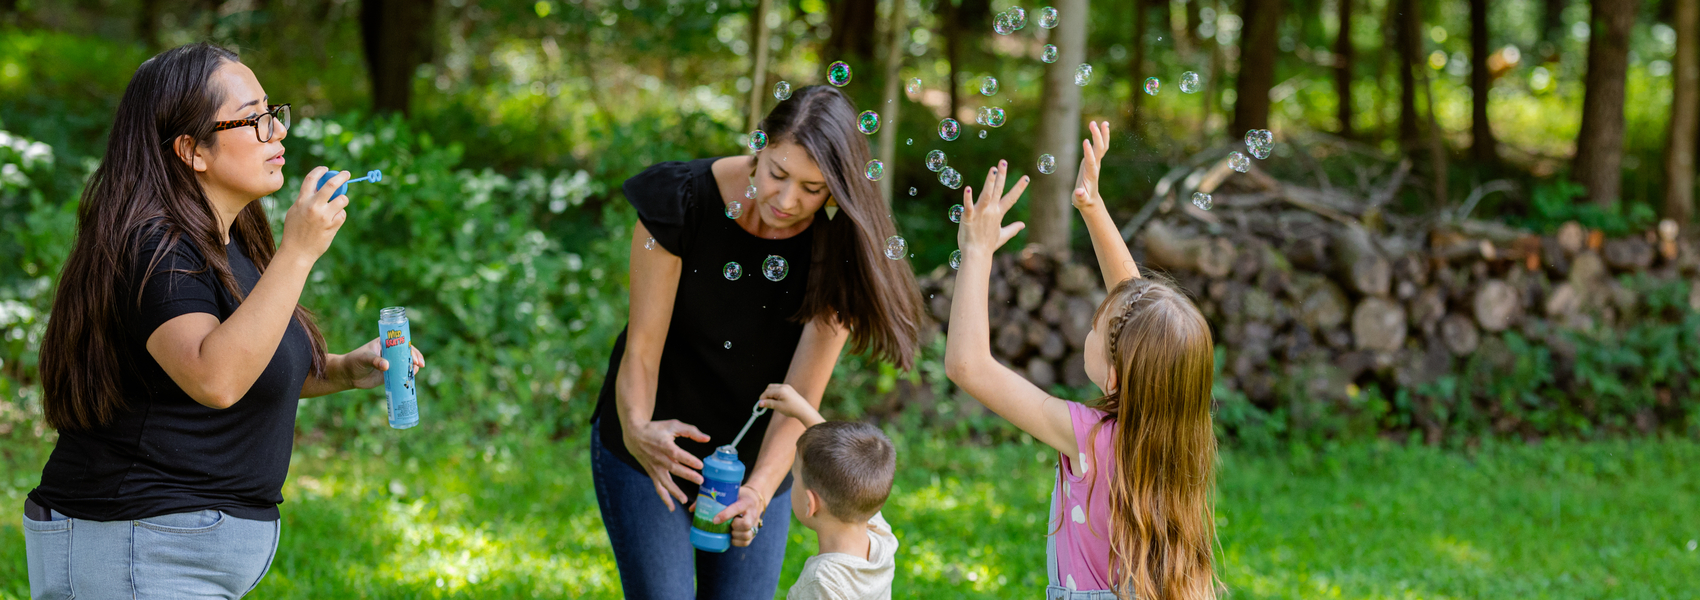 Moms blow bubbles outside with children